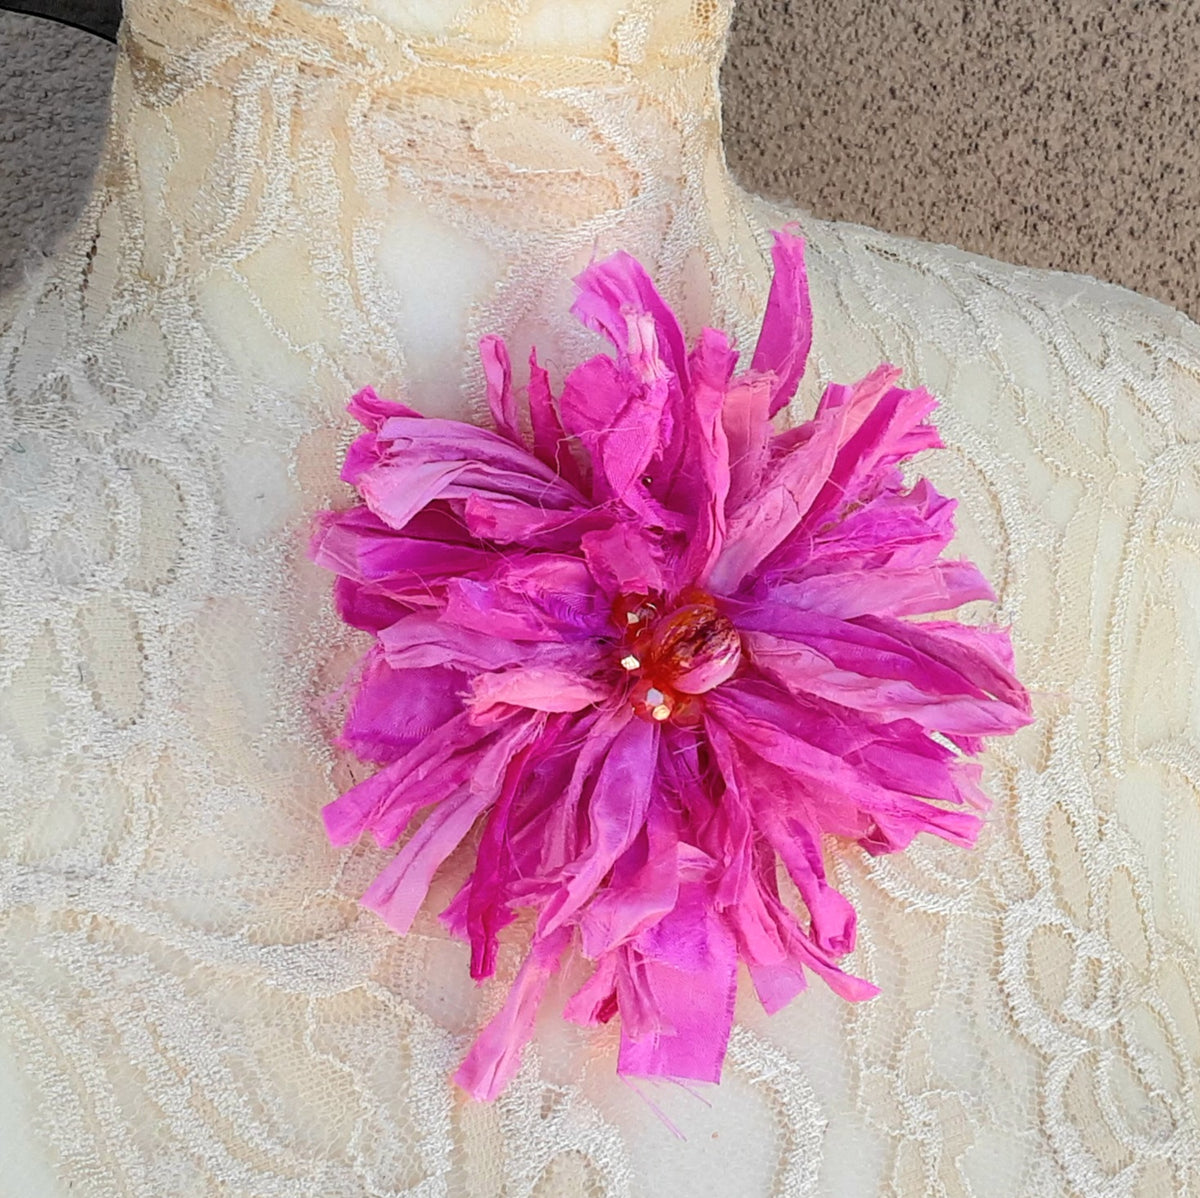 Sari Silk Ribbon Flower Brooch in Lucious Pinks - Large Star Burst Fabric Pin - Fiber Art Corsage